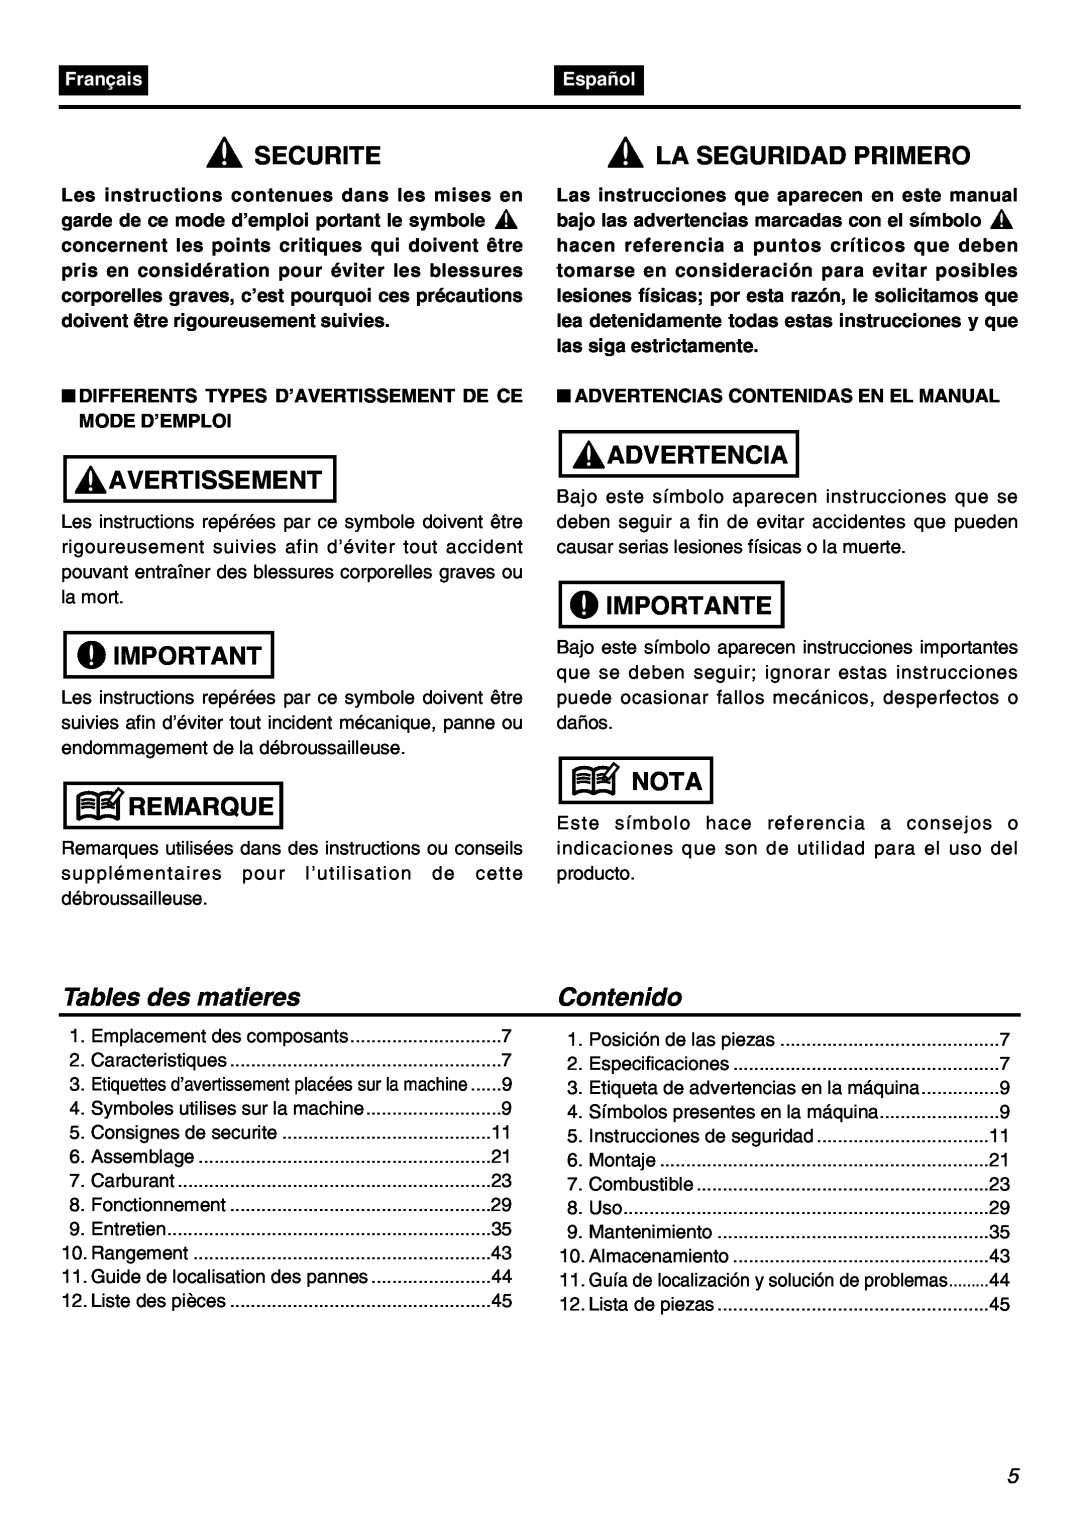 RedMax SRTZ2401F manual Securite, Avertissement, Remarque, Advertencia, Importante, Nota, Tables des matieres, Contenido 